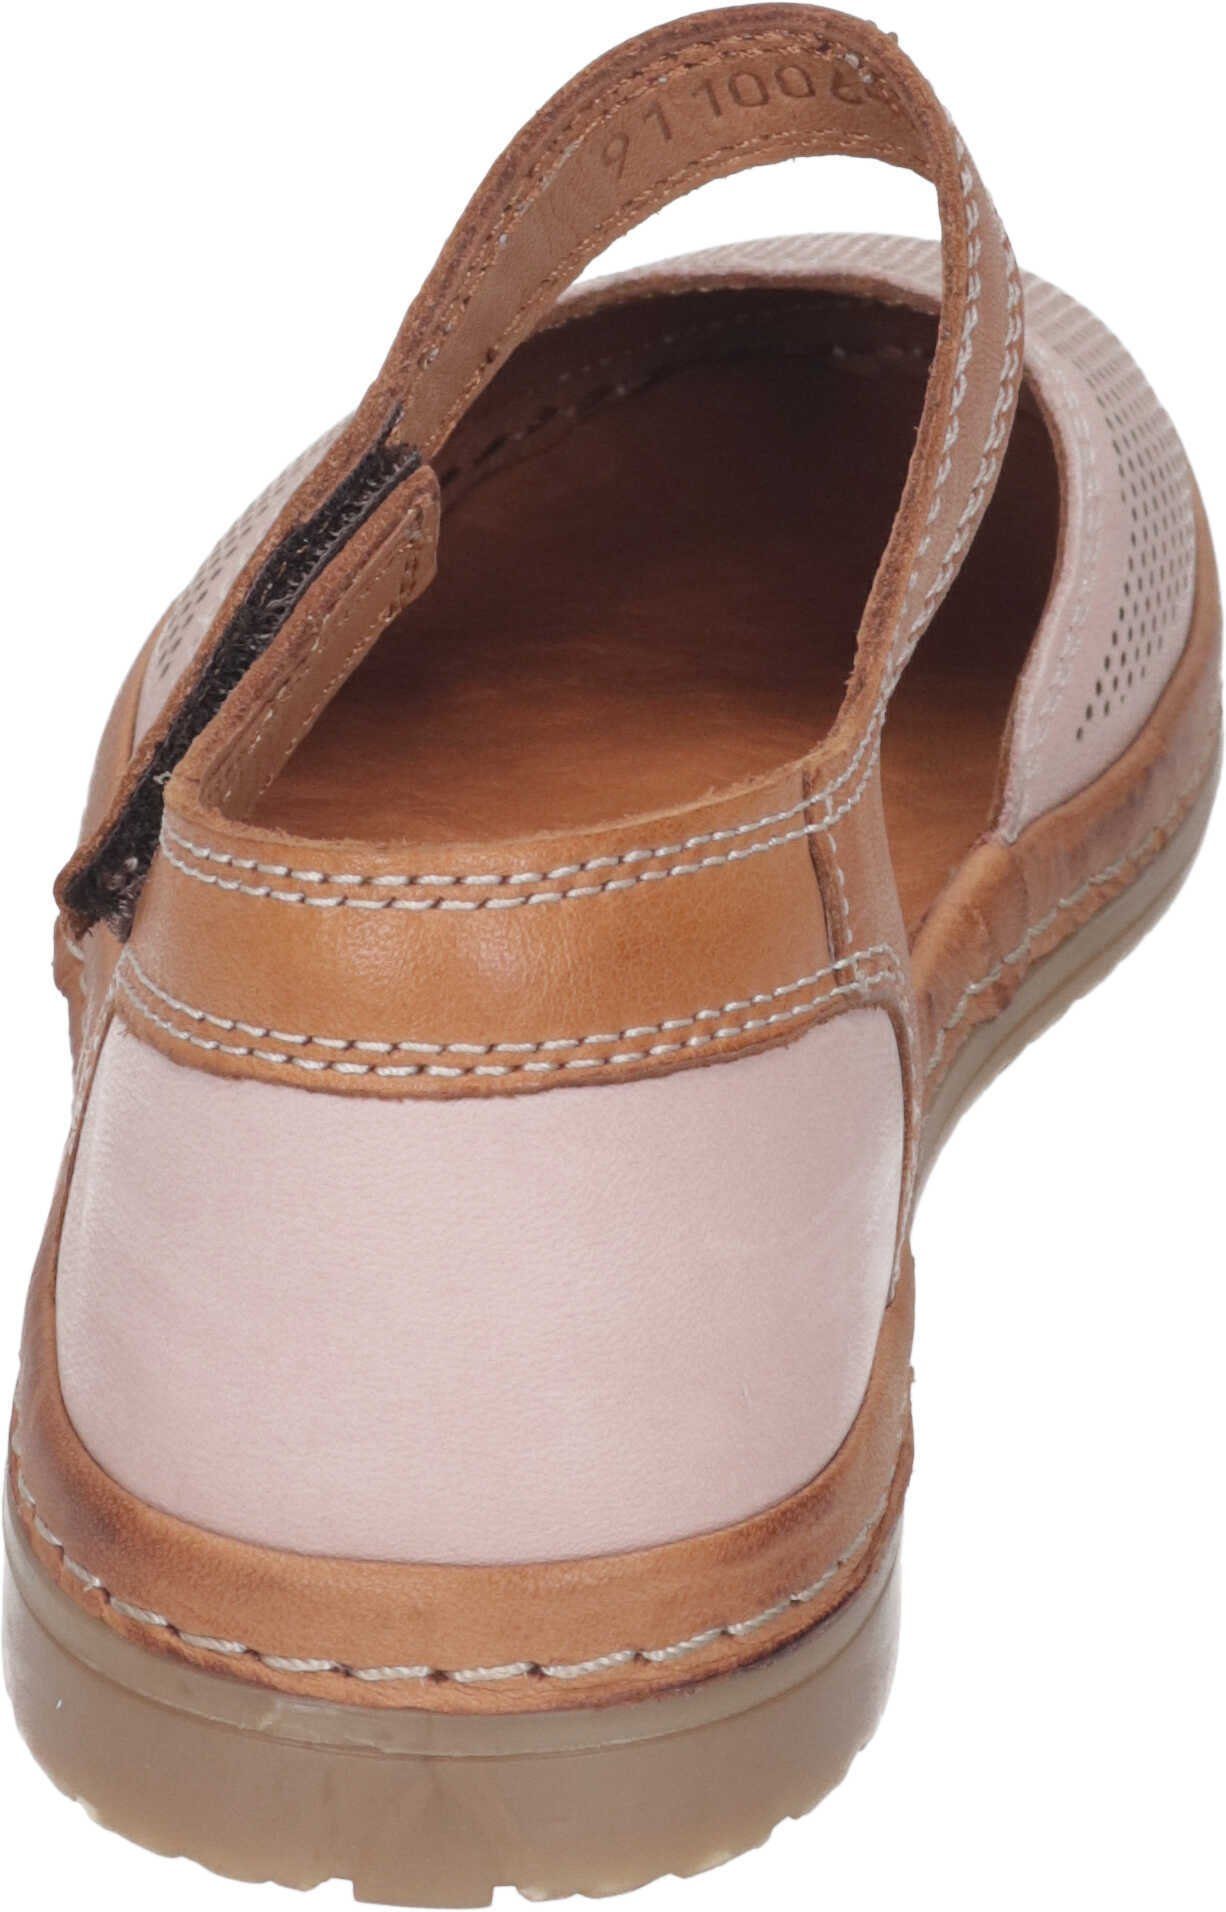 Manitu echtem Sandalette Sandalen Leder aus rosa